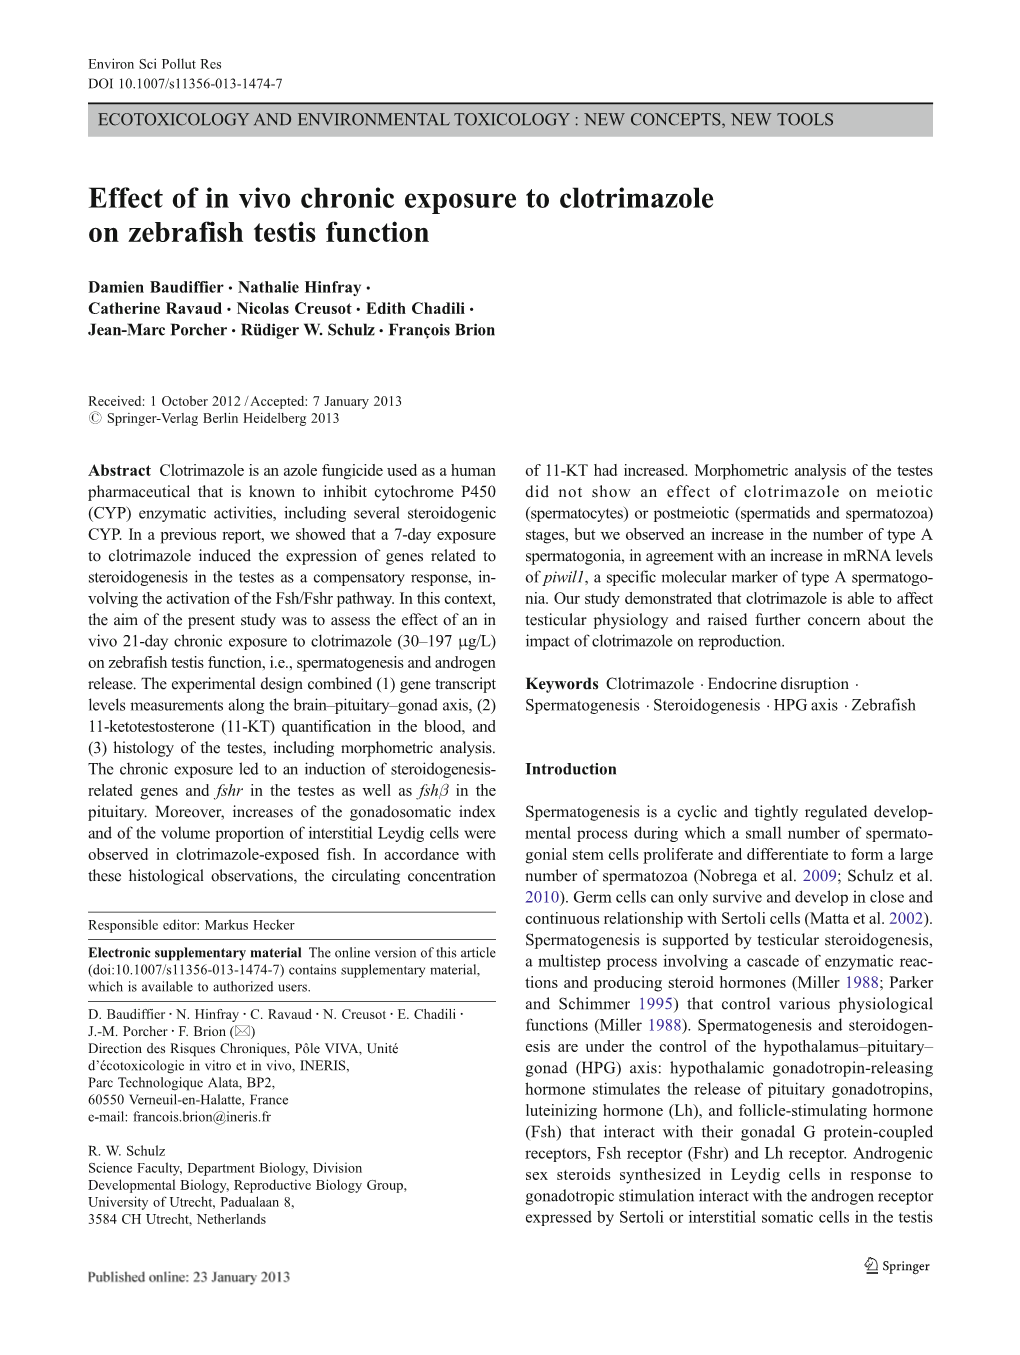 Effect of in Vivo Chronic Exposure to Clotrimazole on Zebrafish Testis Function